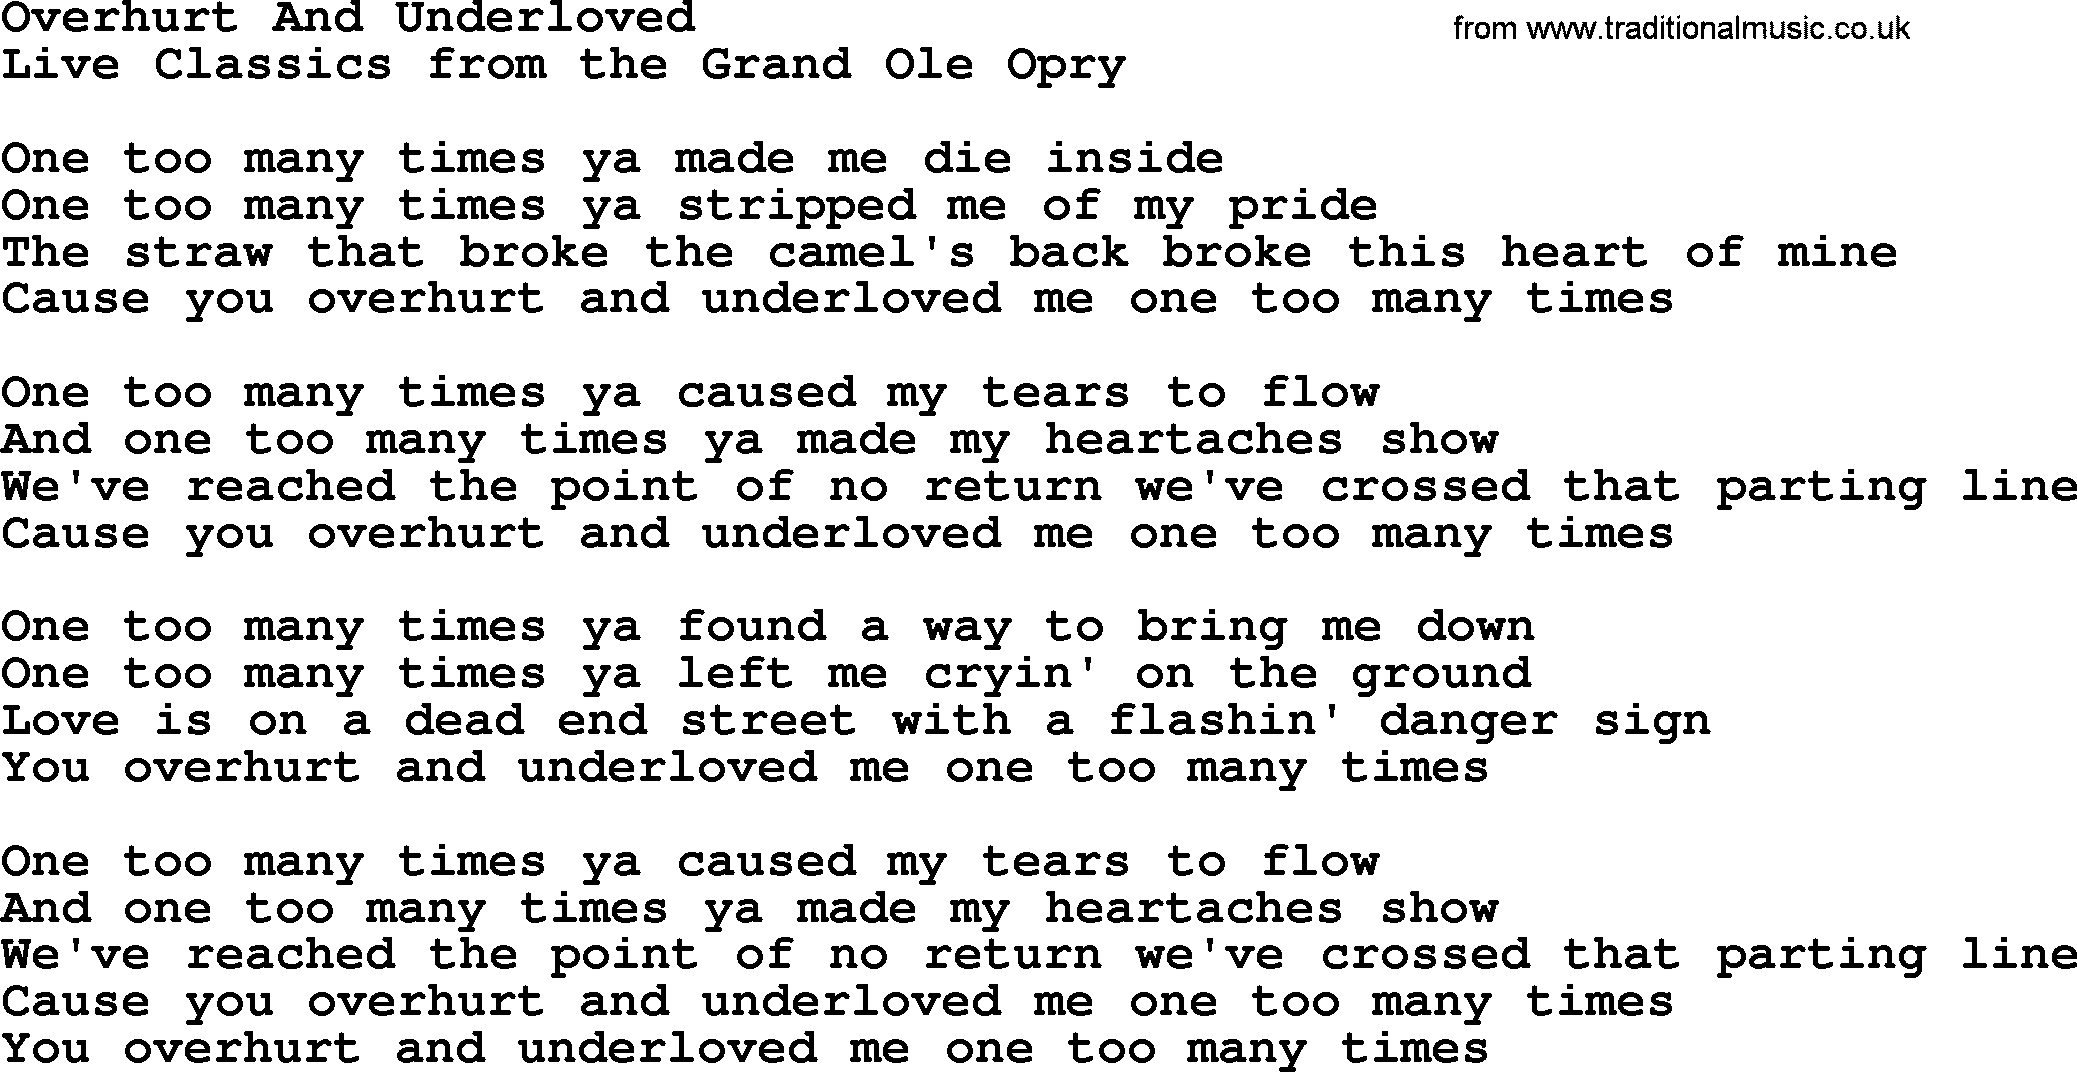 Marty Robbins song: Overhurt And Underloved, lyrics